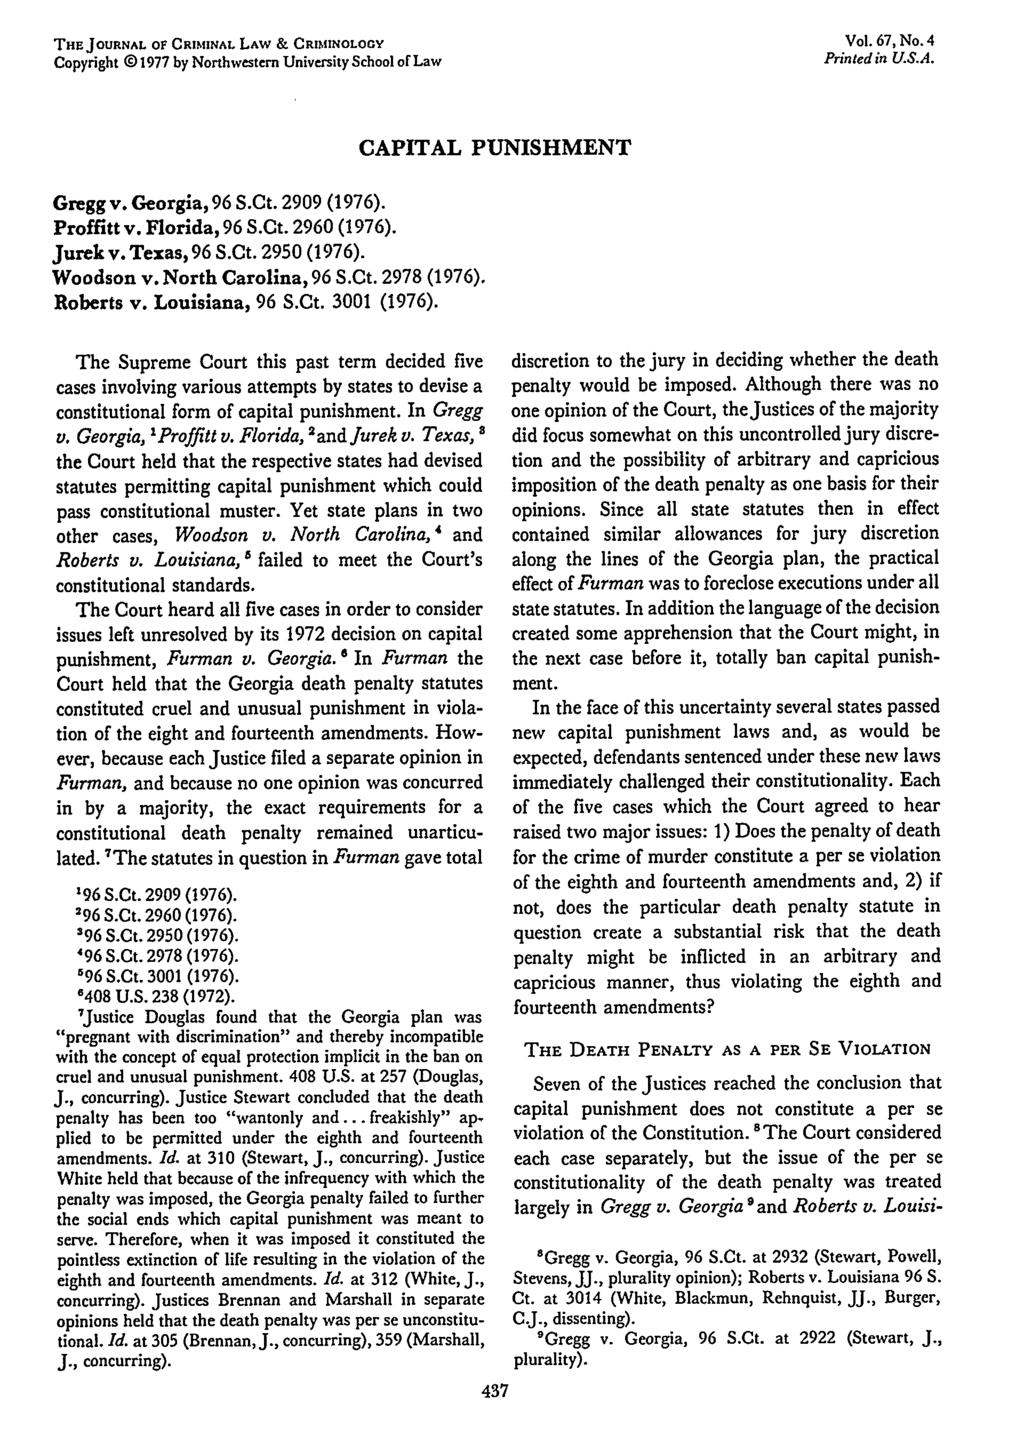 THEJOURNAL OF CRIMINAL LAW & CRIMINOLOGY Copyright 0 1977 by Northwestern University School of Law Vol. 67, No. 4 Printed in U.S.A. Gregg v. Georgia, 96 S.Ct. 2909 (1976). Proffitt v. Florida, 96 S.